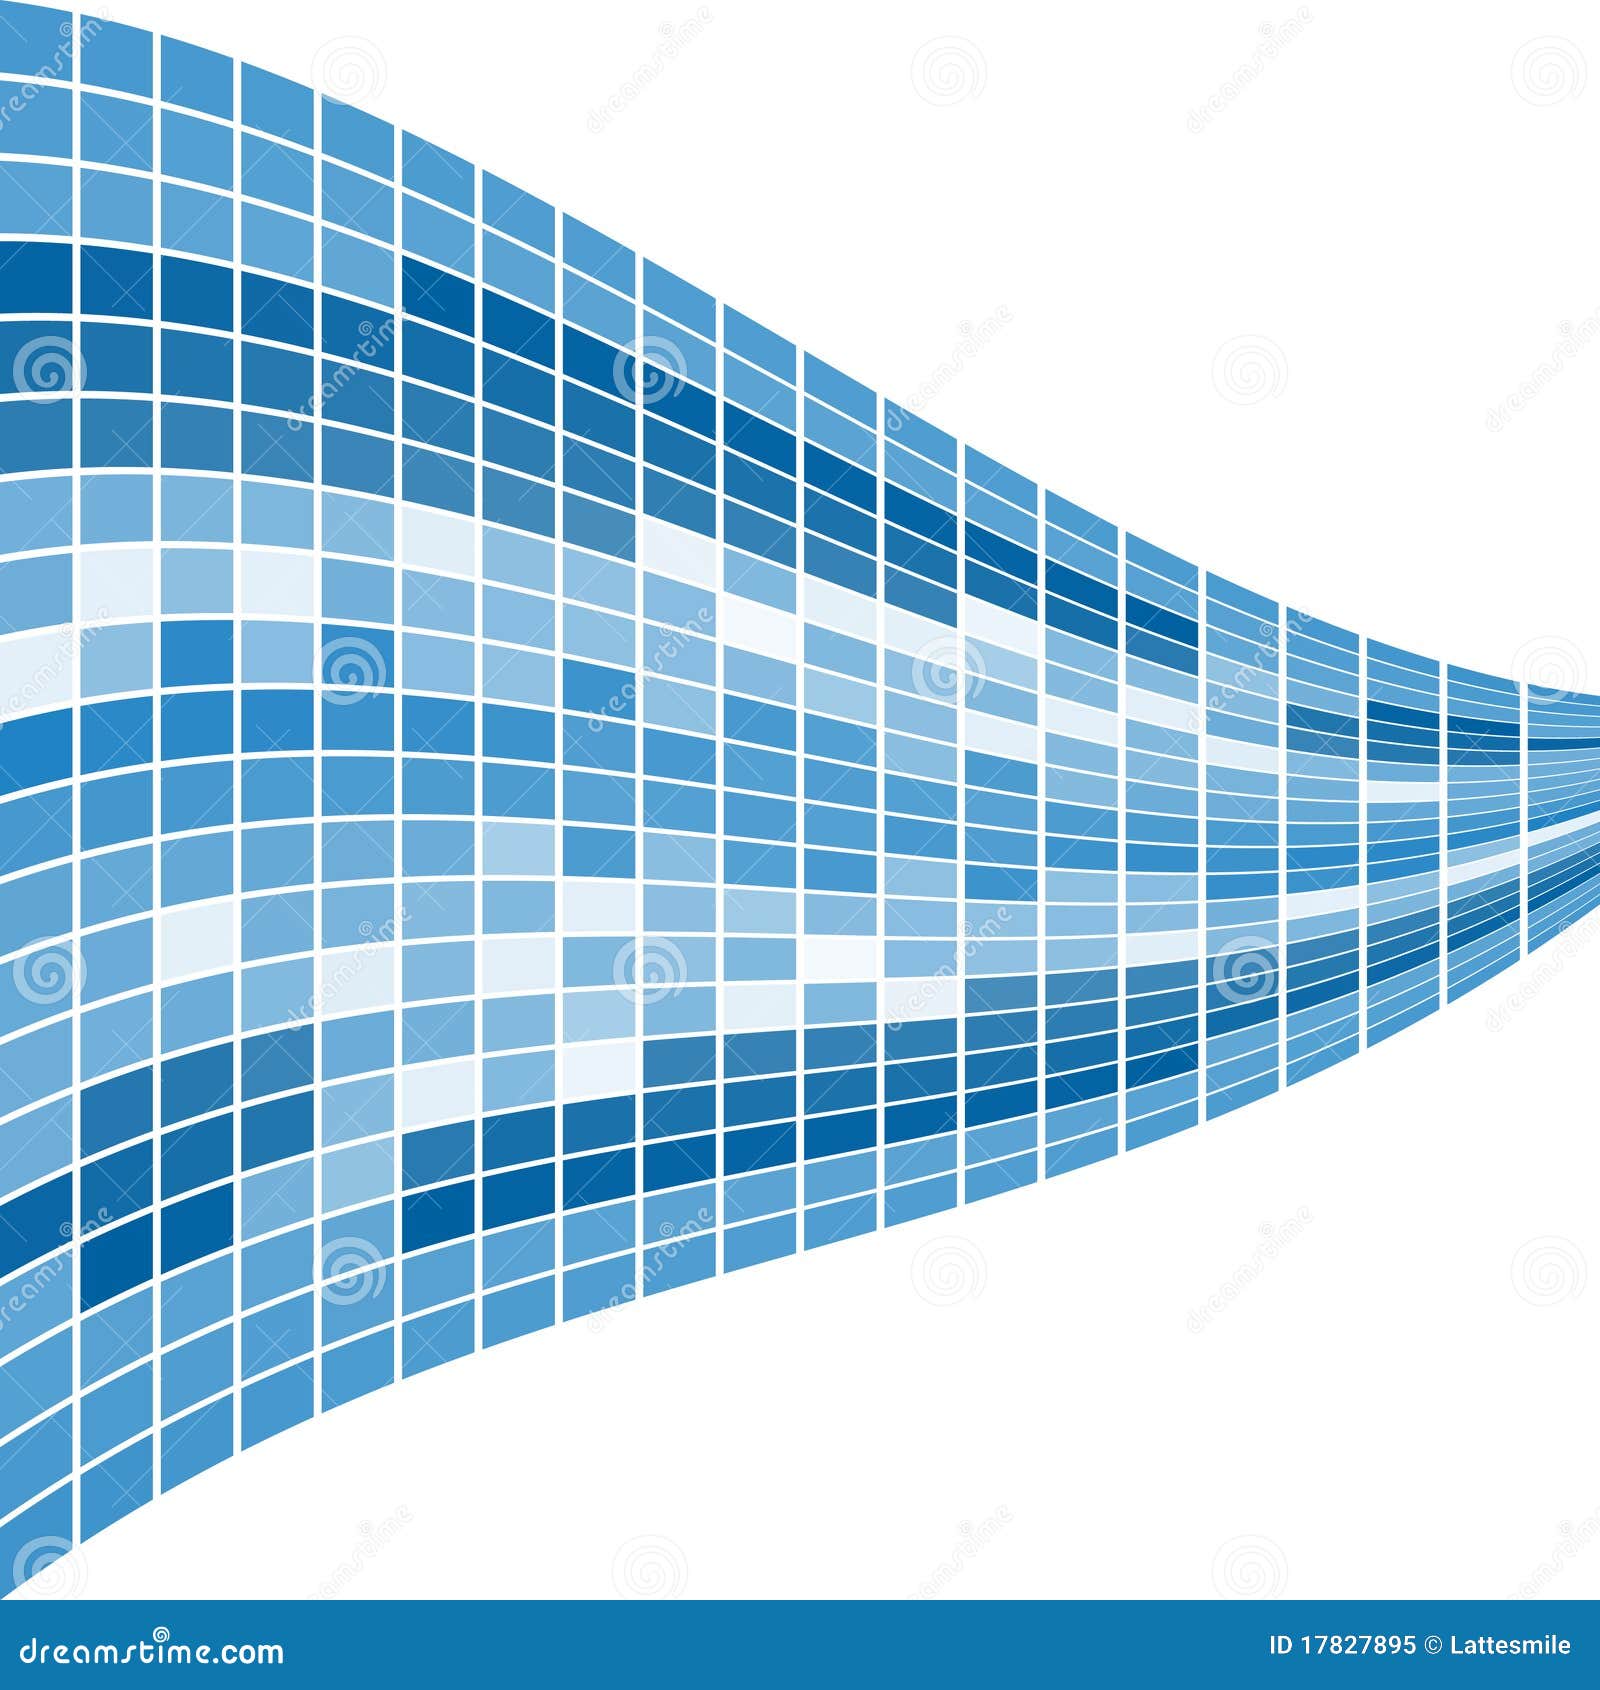 Blue mosaic background stock vector. Illustration of illustration